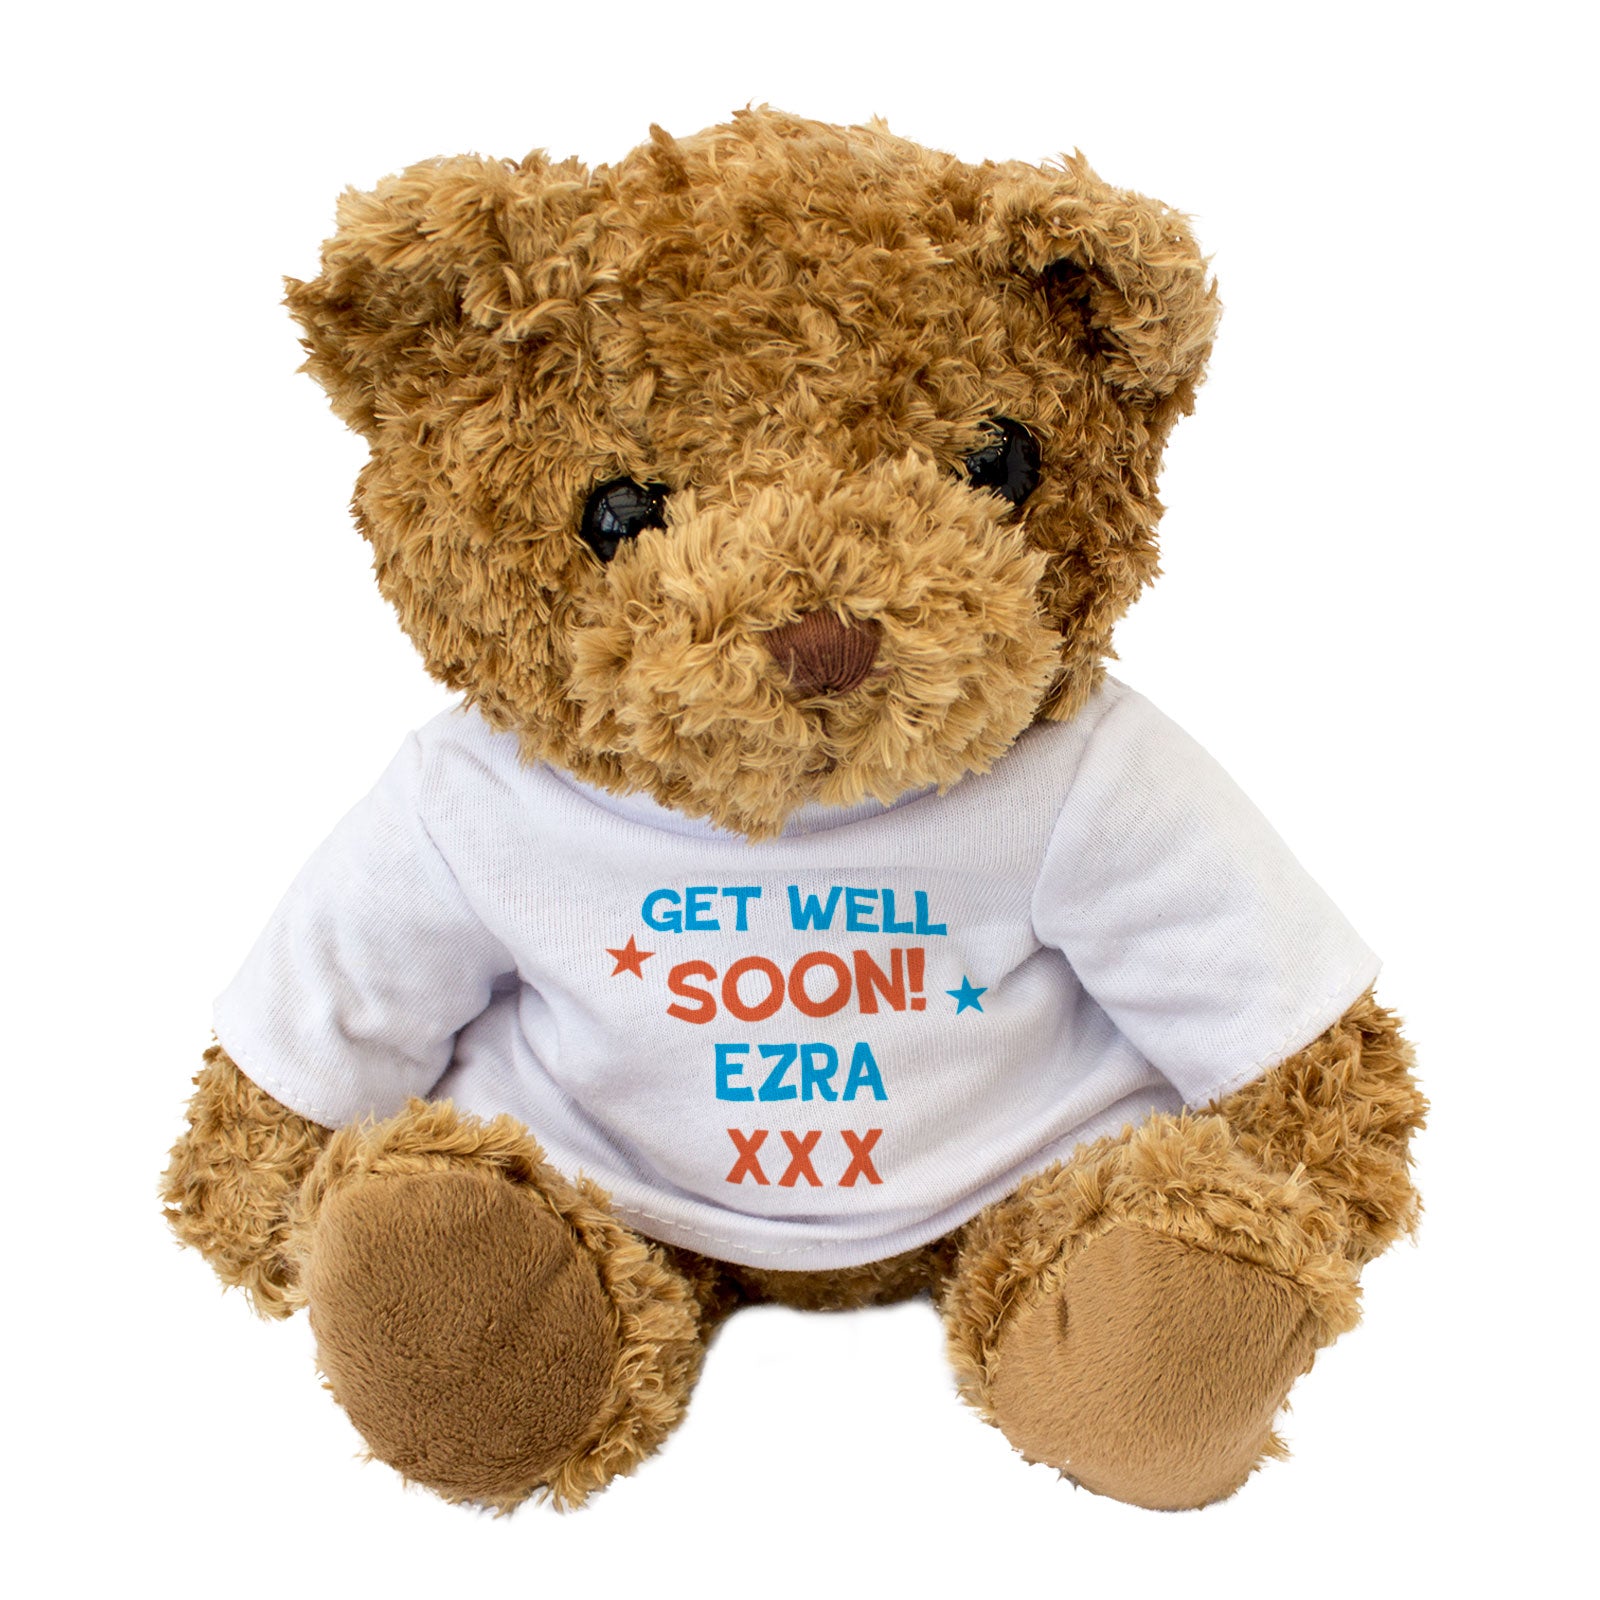 Get Well Soon Ezra - Teddy Bear